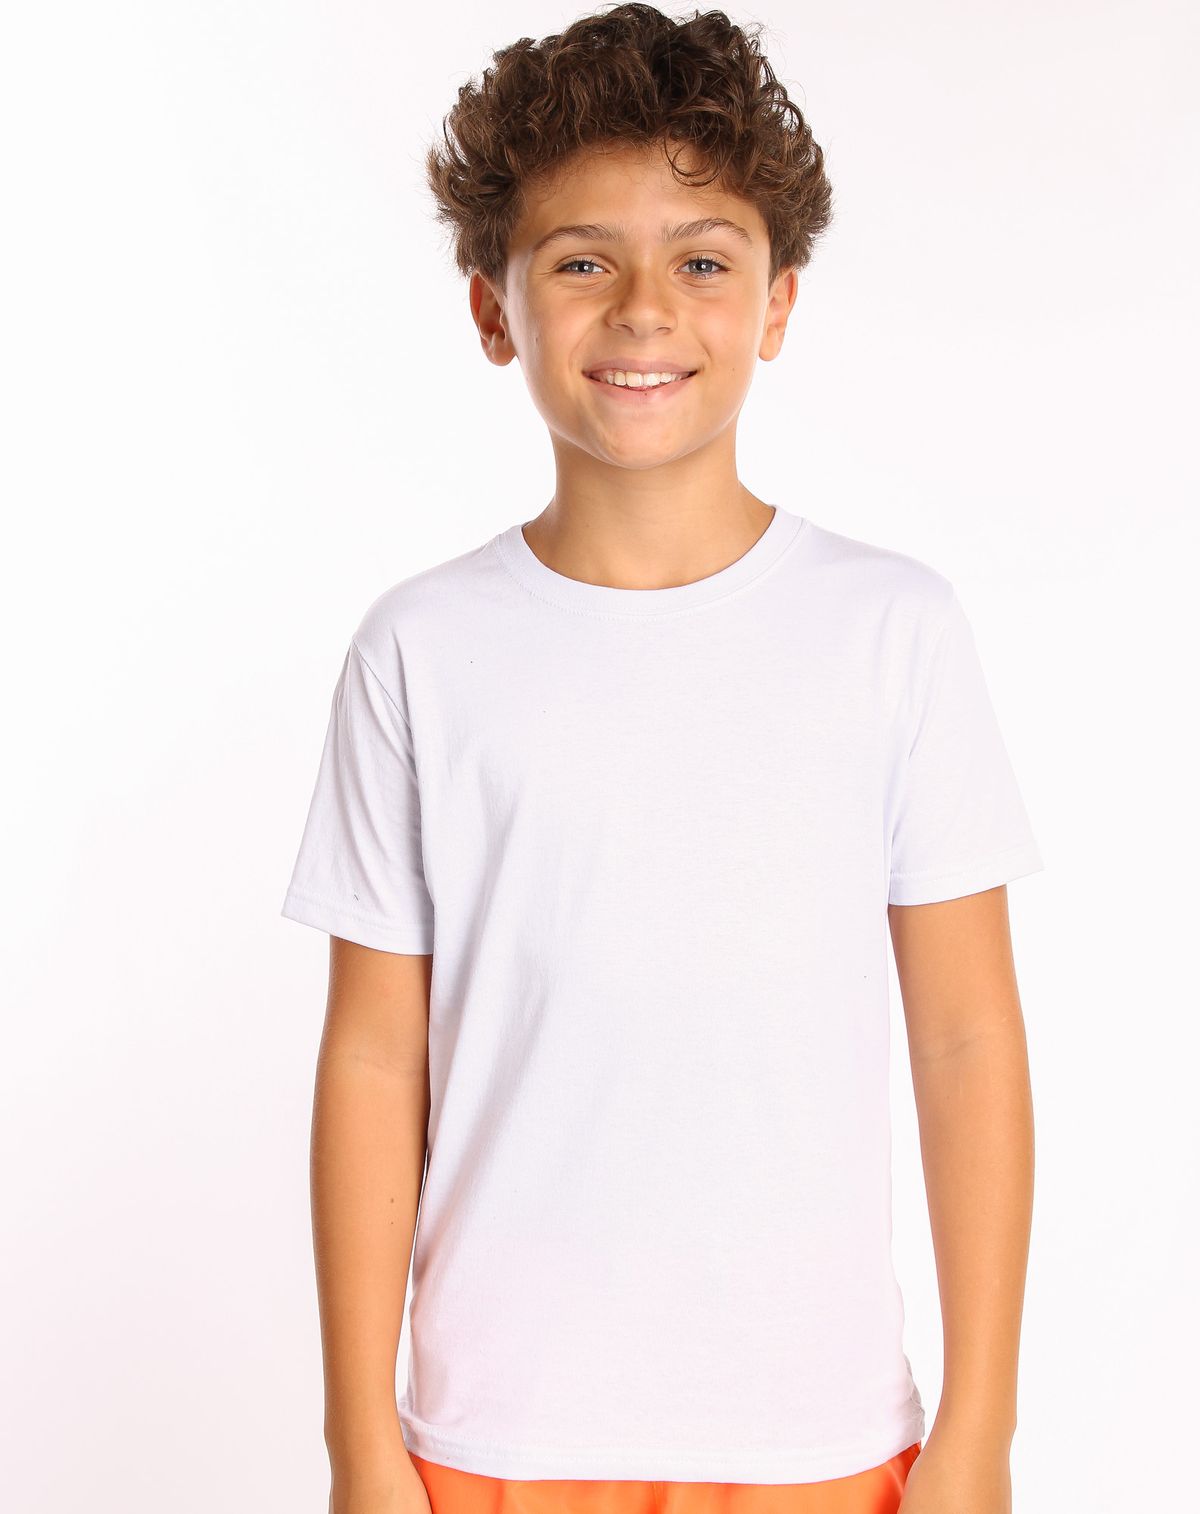 692648001-camiseta-manga-curta-juvenil-menino-basica-branco-10-abf